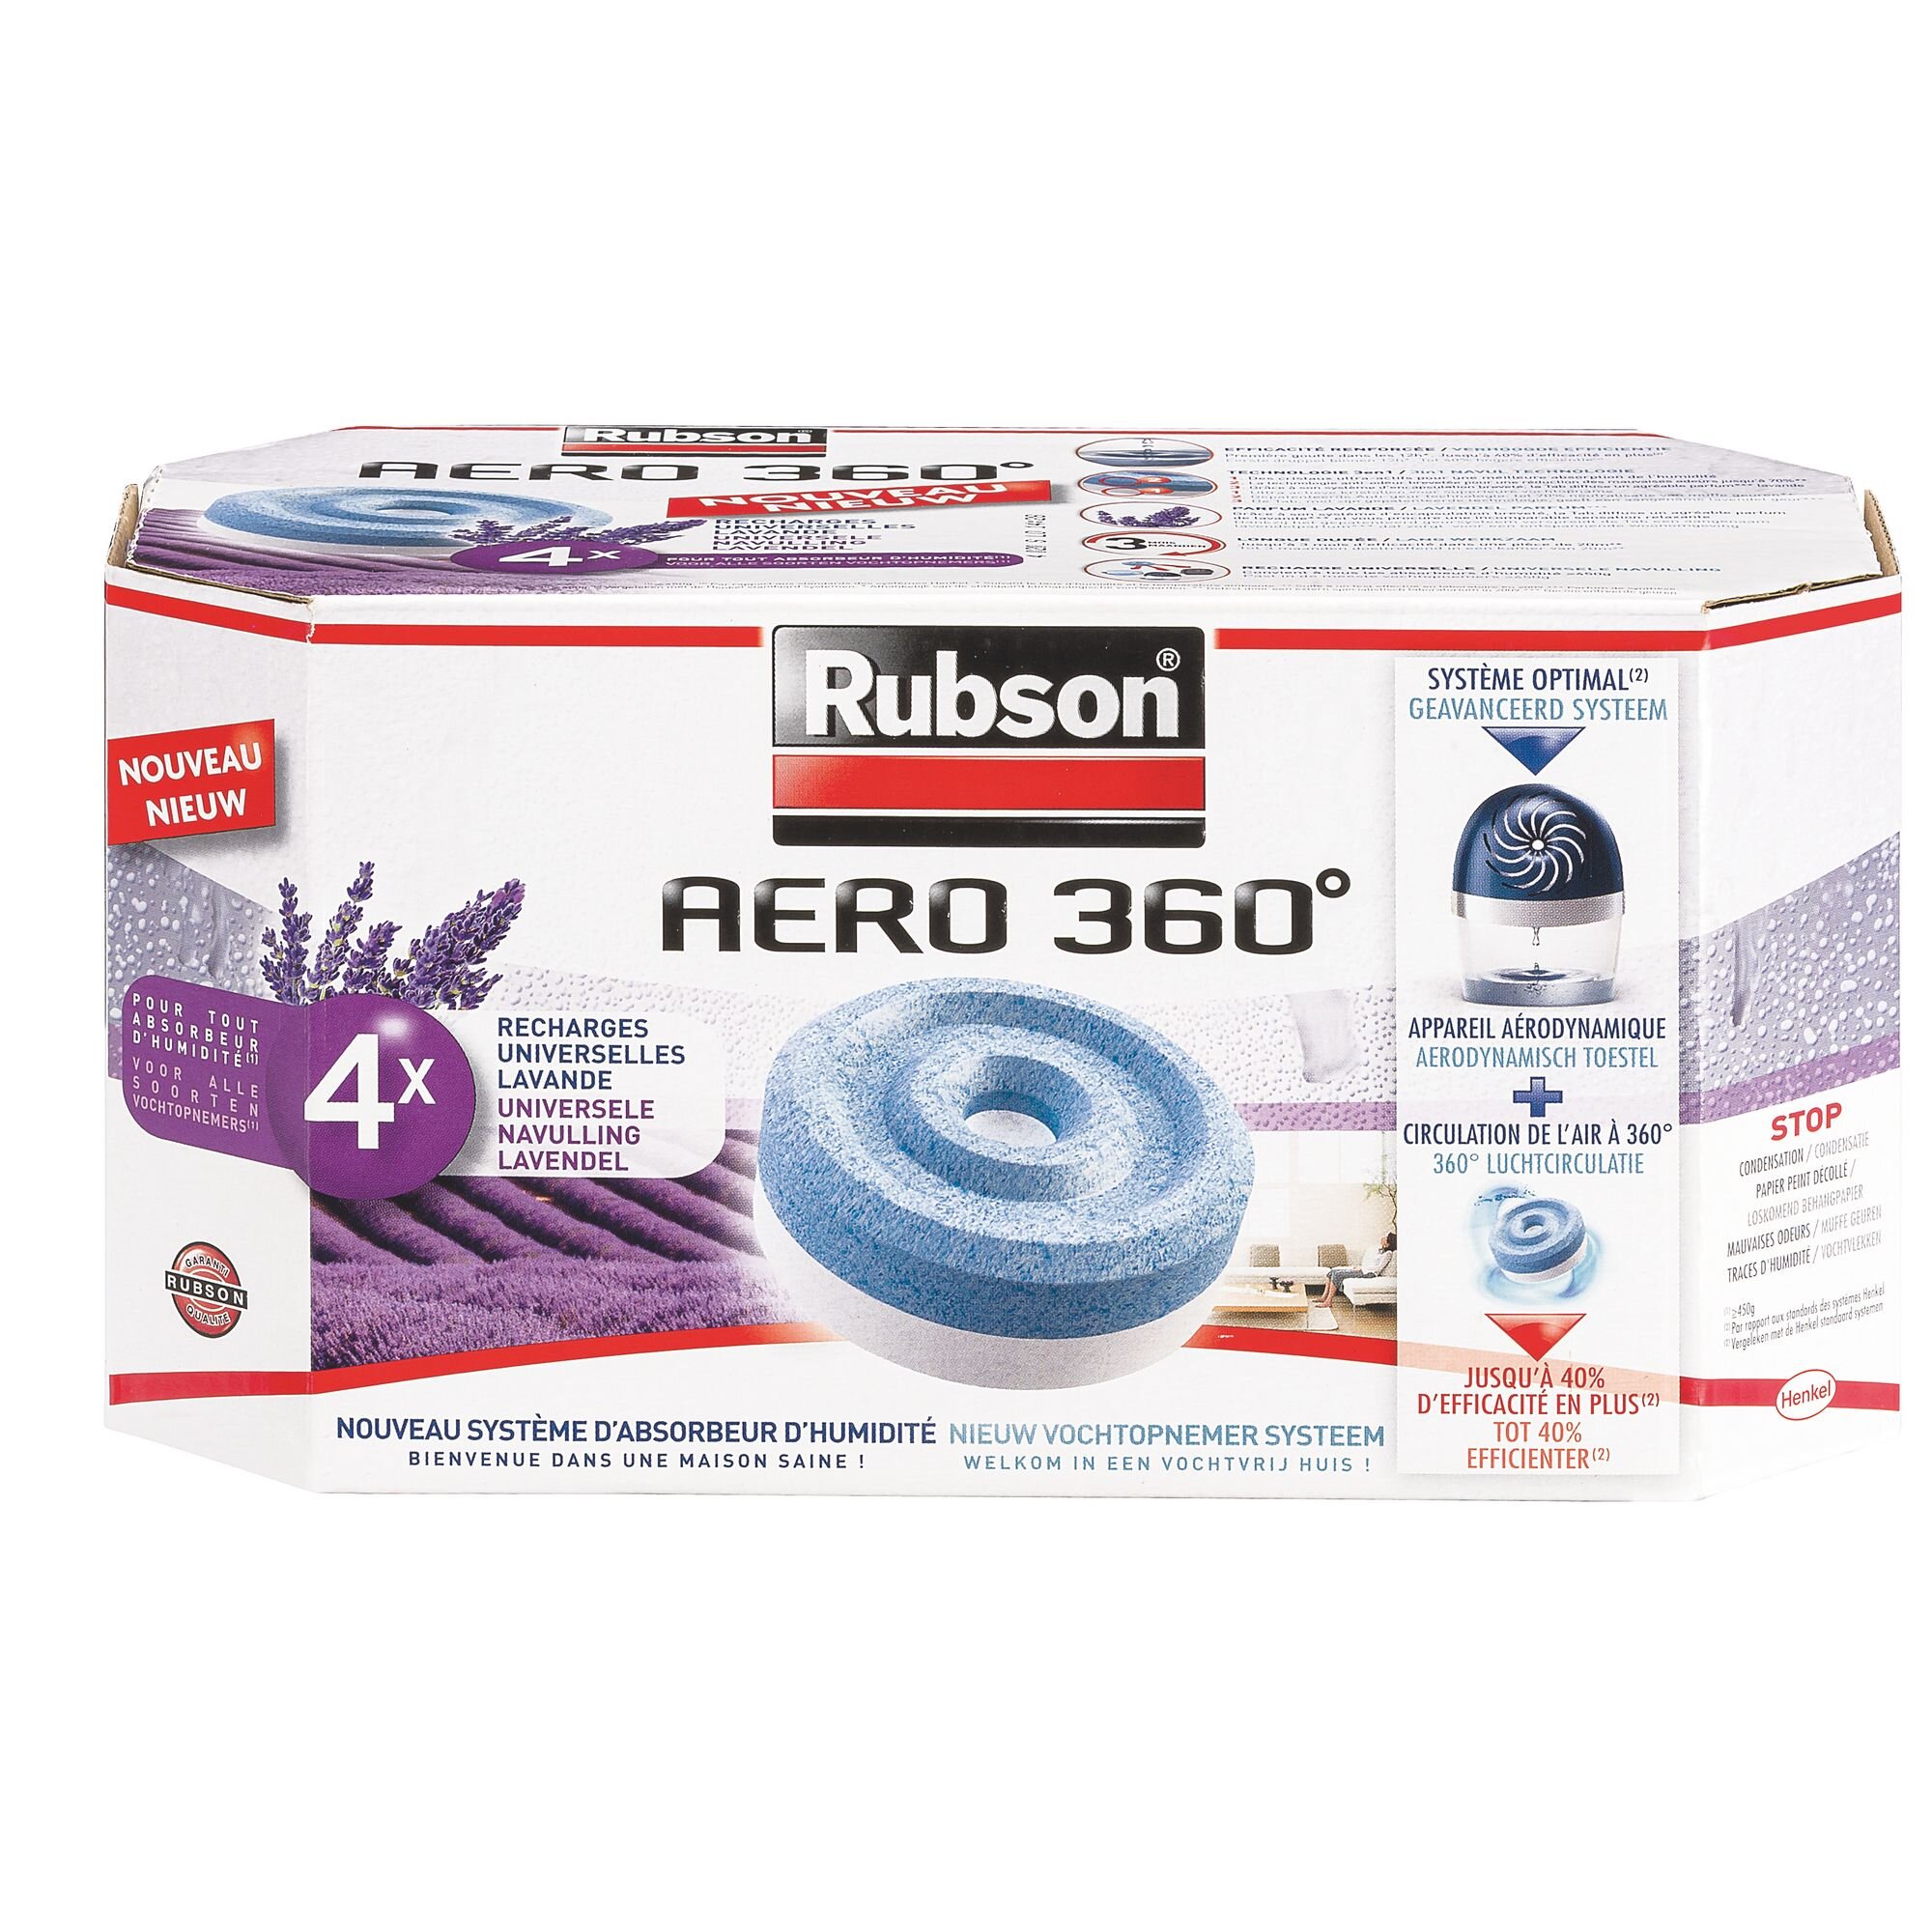 RUBSON - Absorbeur d'humidité AERO 360°